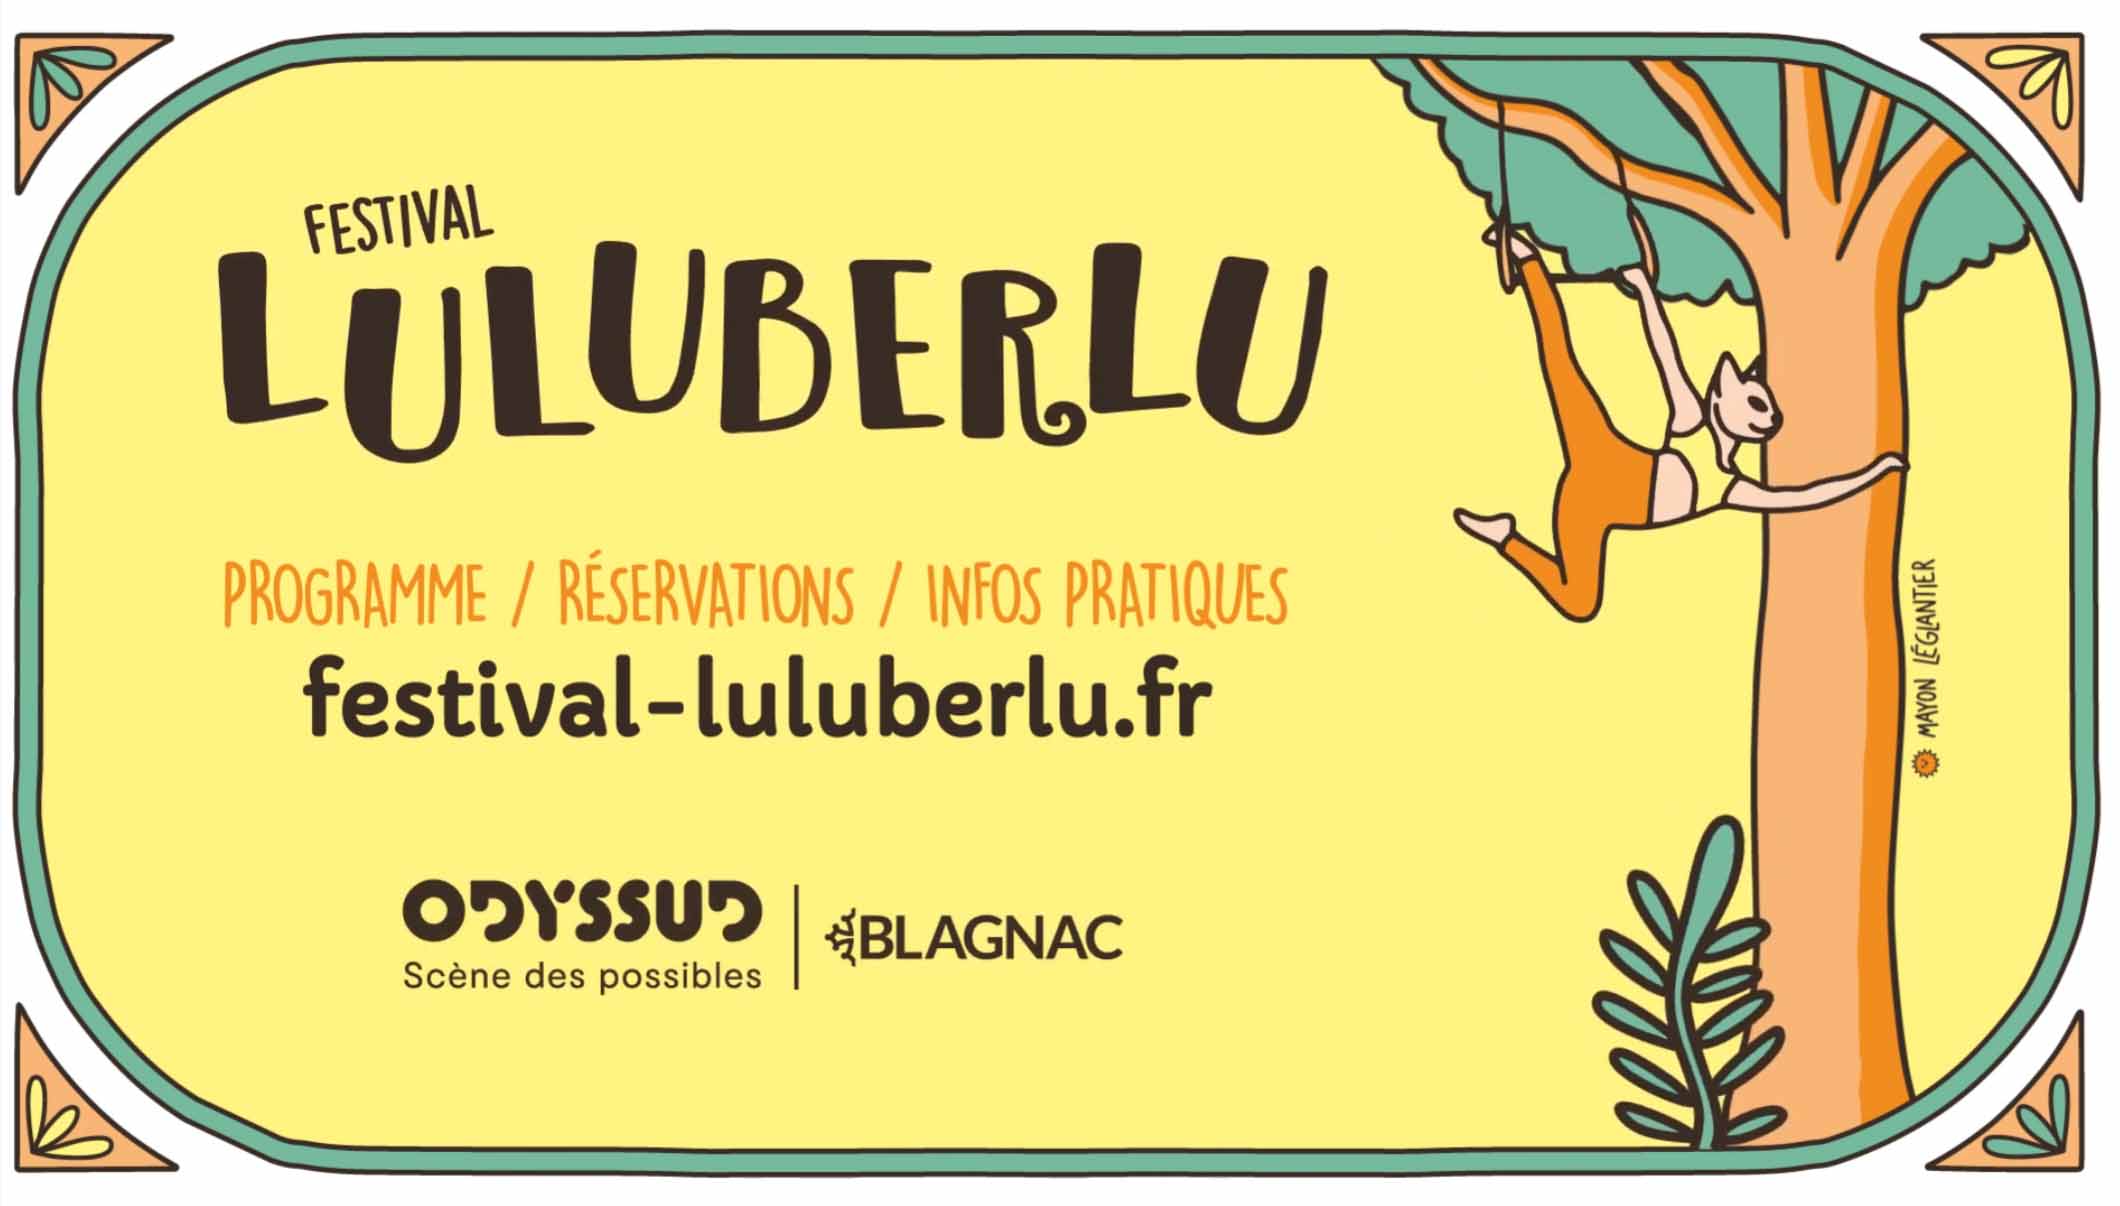 (c) Festival-luluberlu.fr